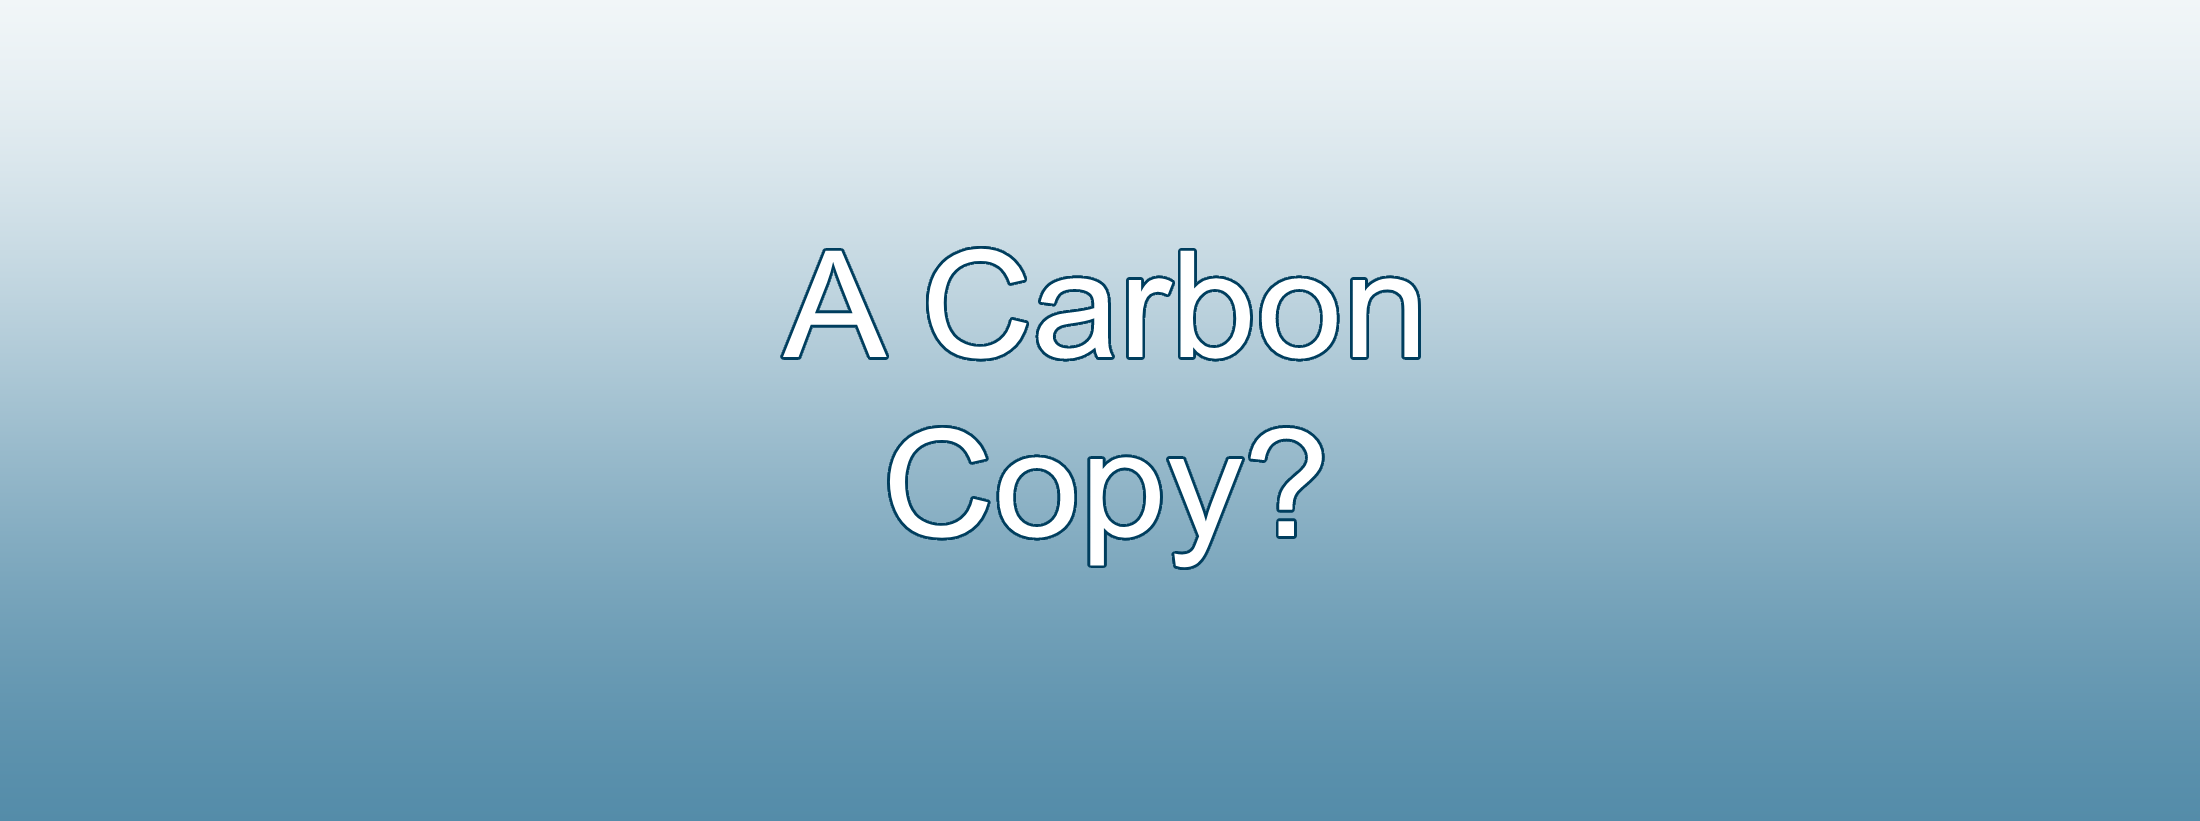 Arial: A Carbon Copy? 